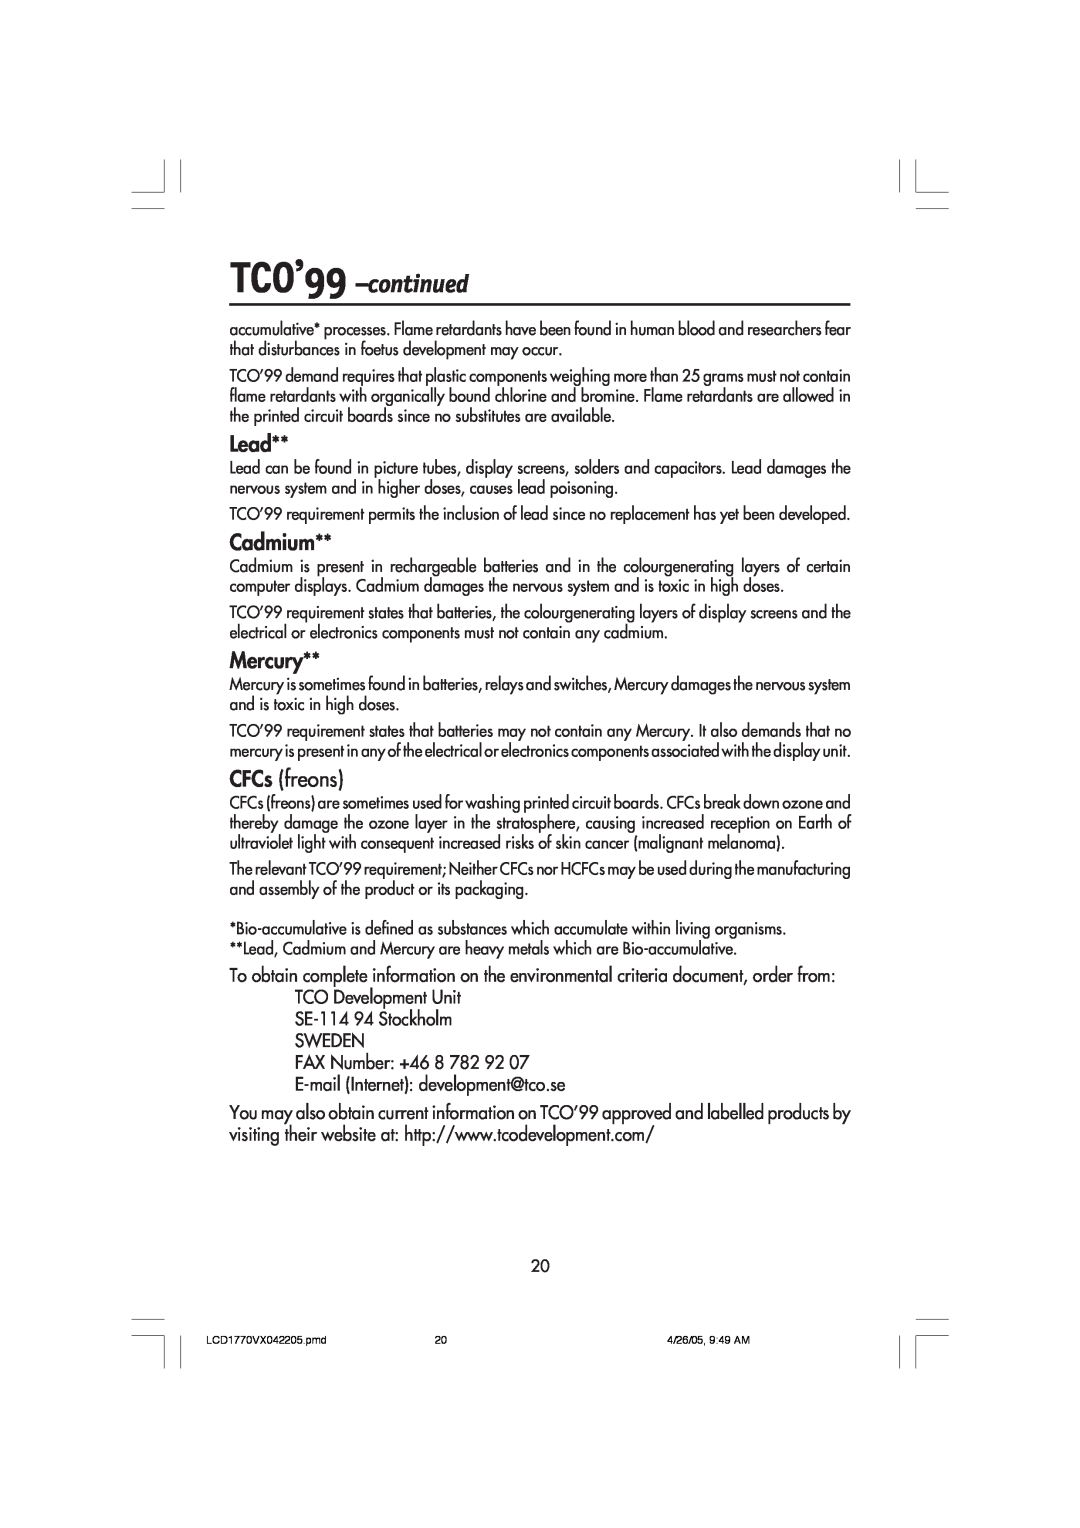 NEC LCD1770VX user manual TCO’99 -continued, Lead, Cadmium, Mercury, CFCs freons 